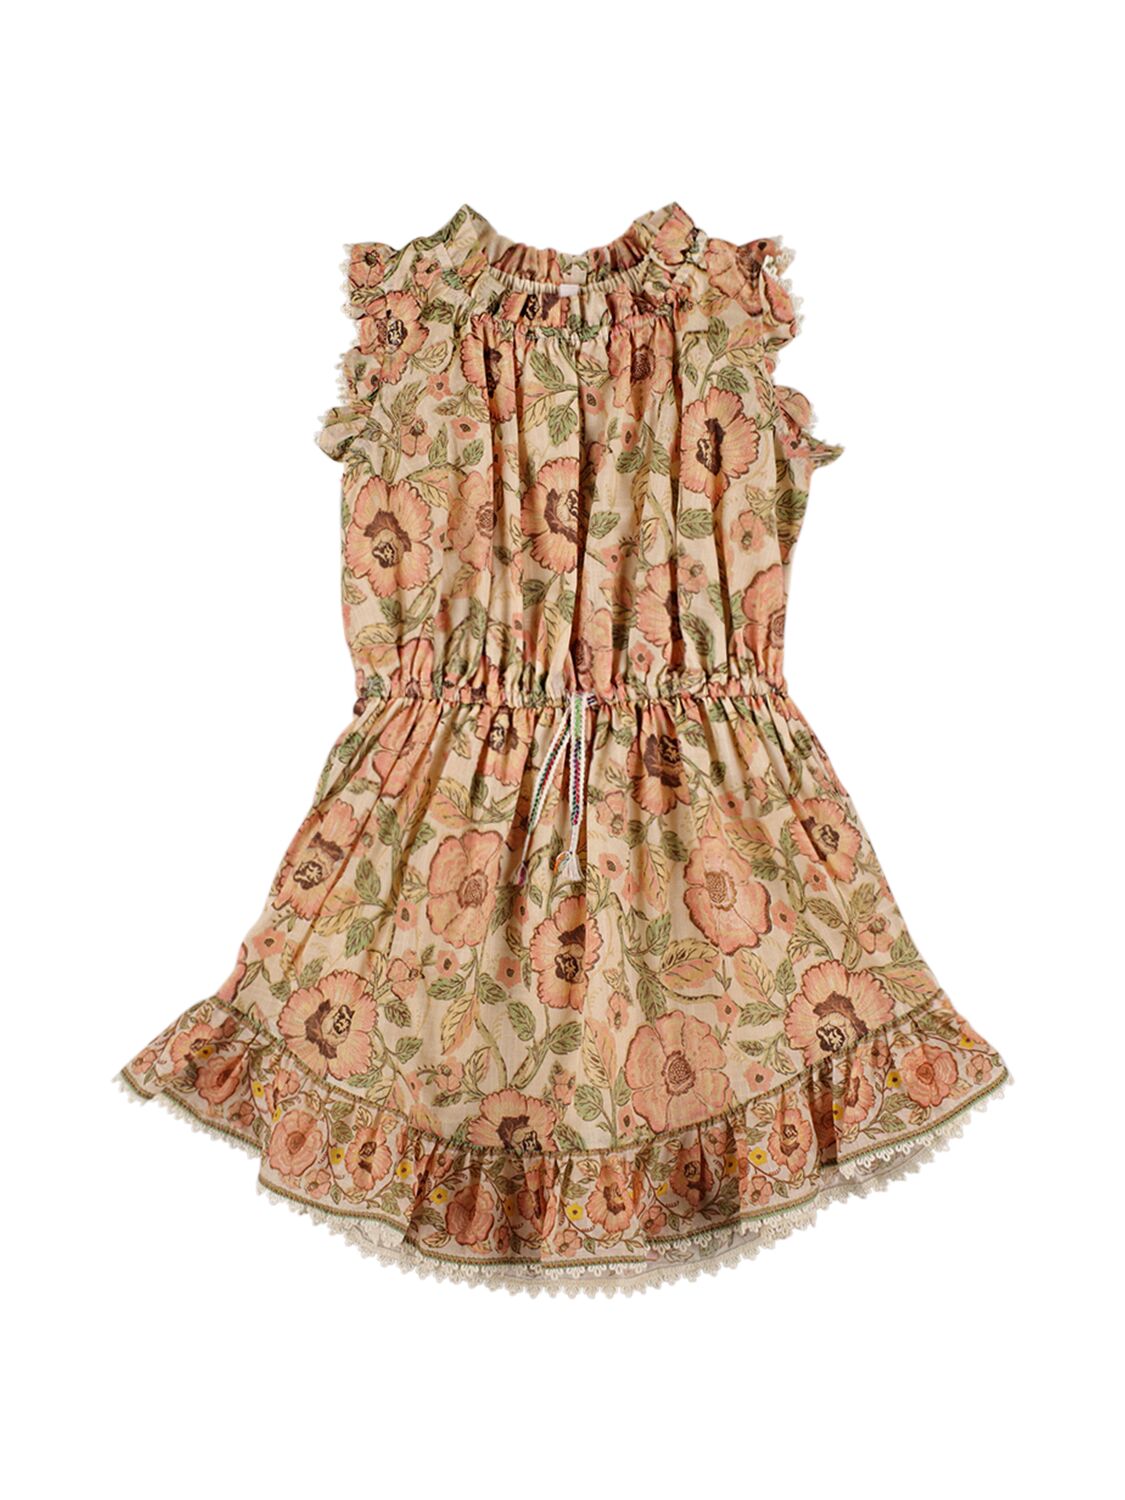 Image of Printed Cotton Muslin Dress